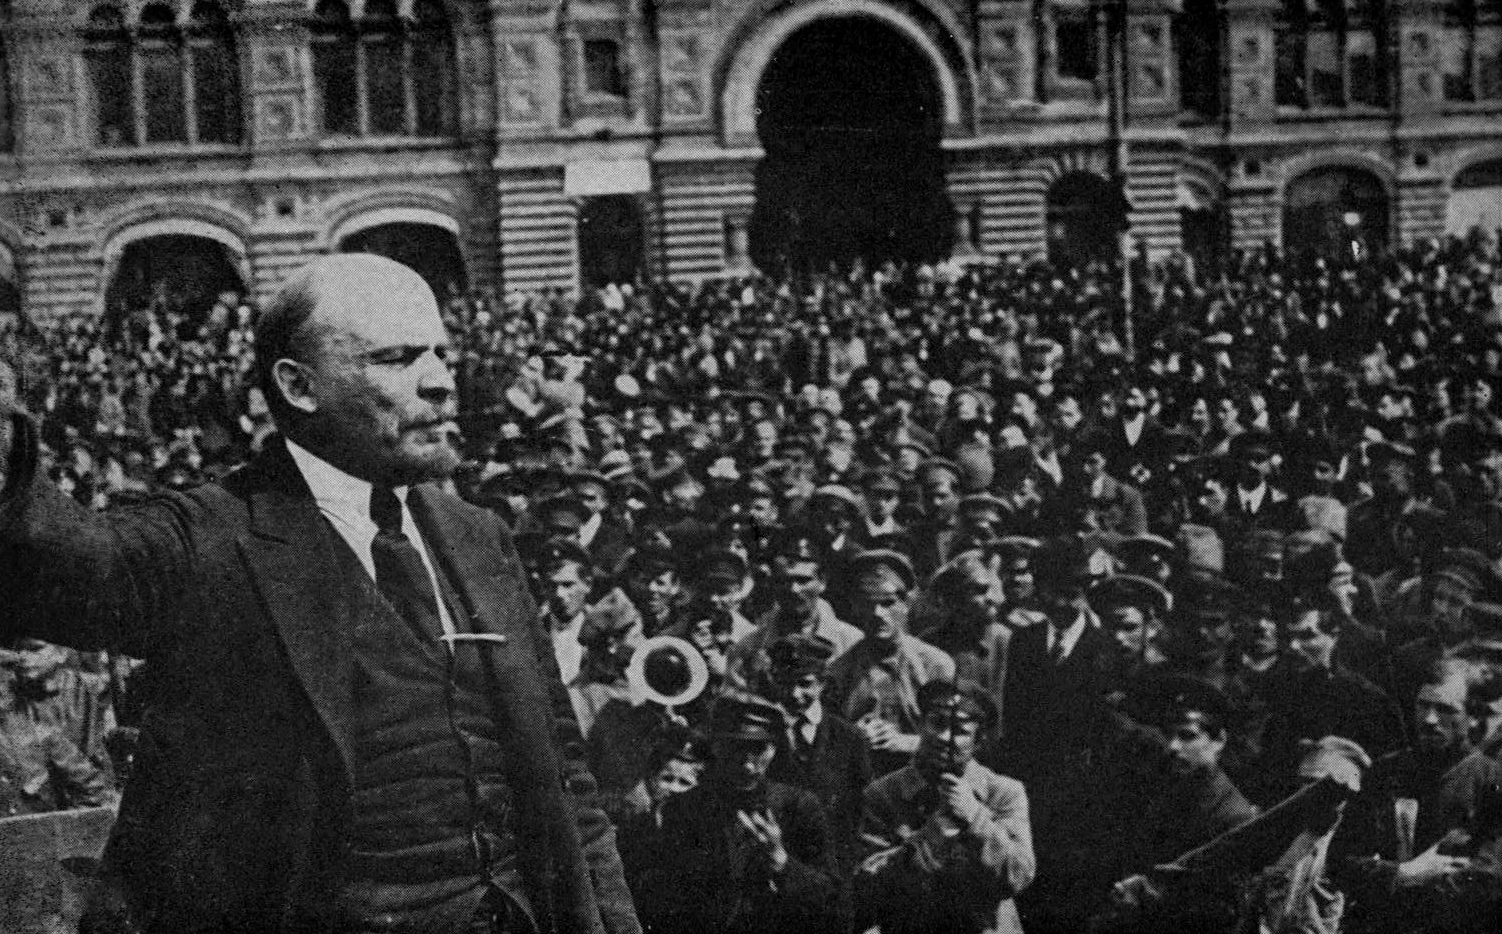 1870: Birth of Vladimir Lenin in the City on the Longest River in Europe